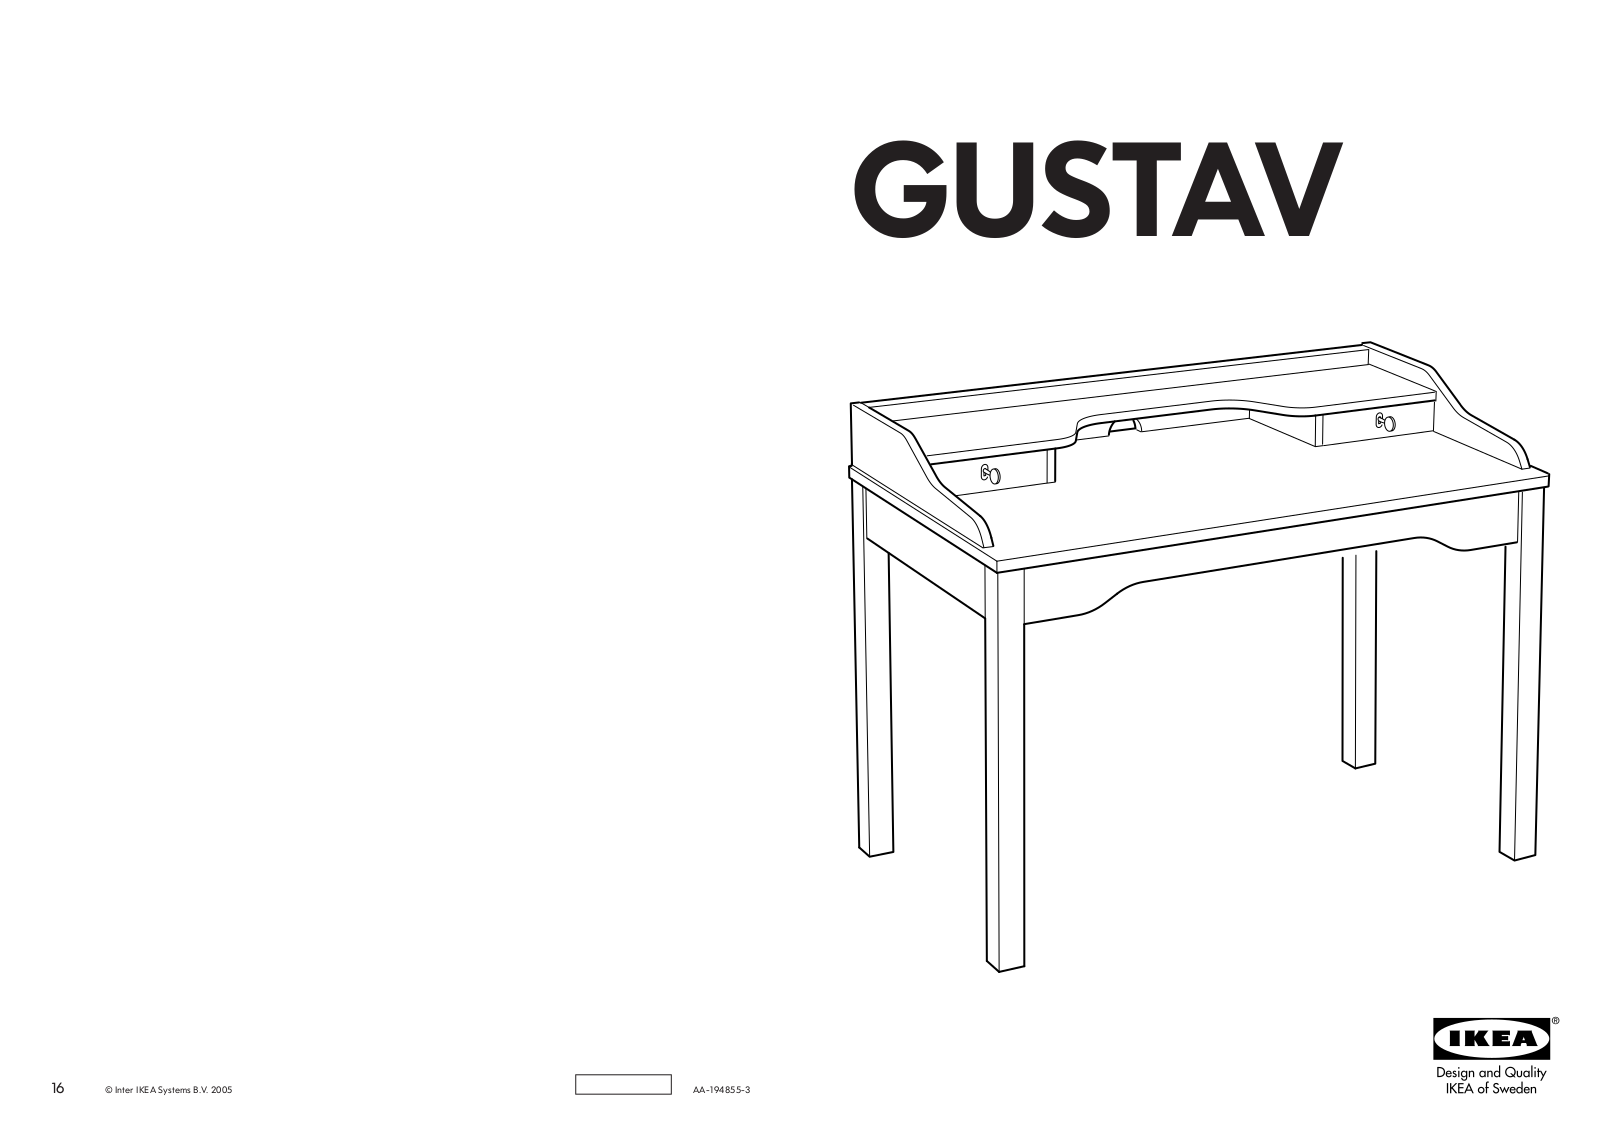 IKEA GUSTAV DESK/SHELF UNIT 43X24